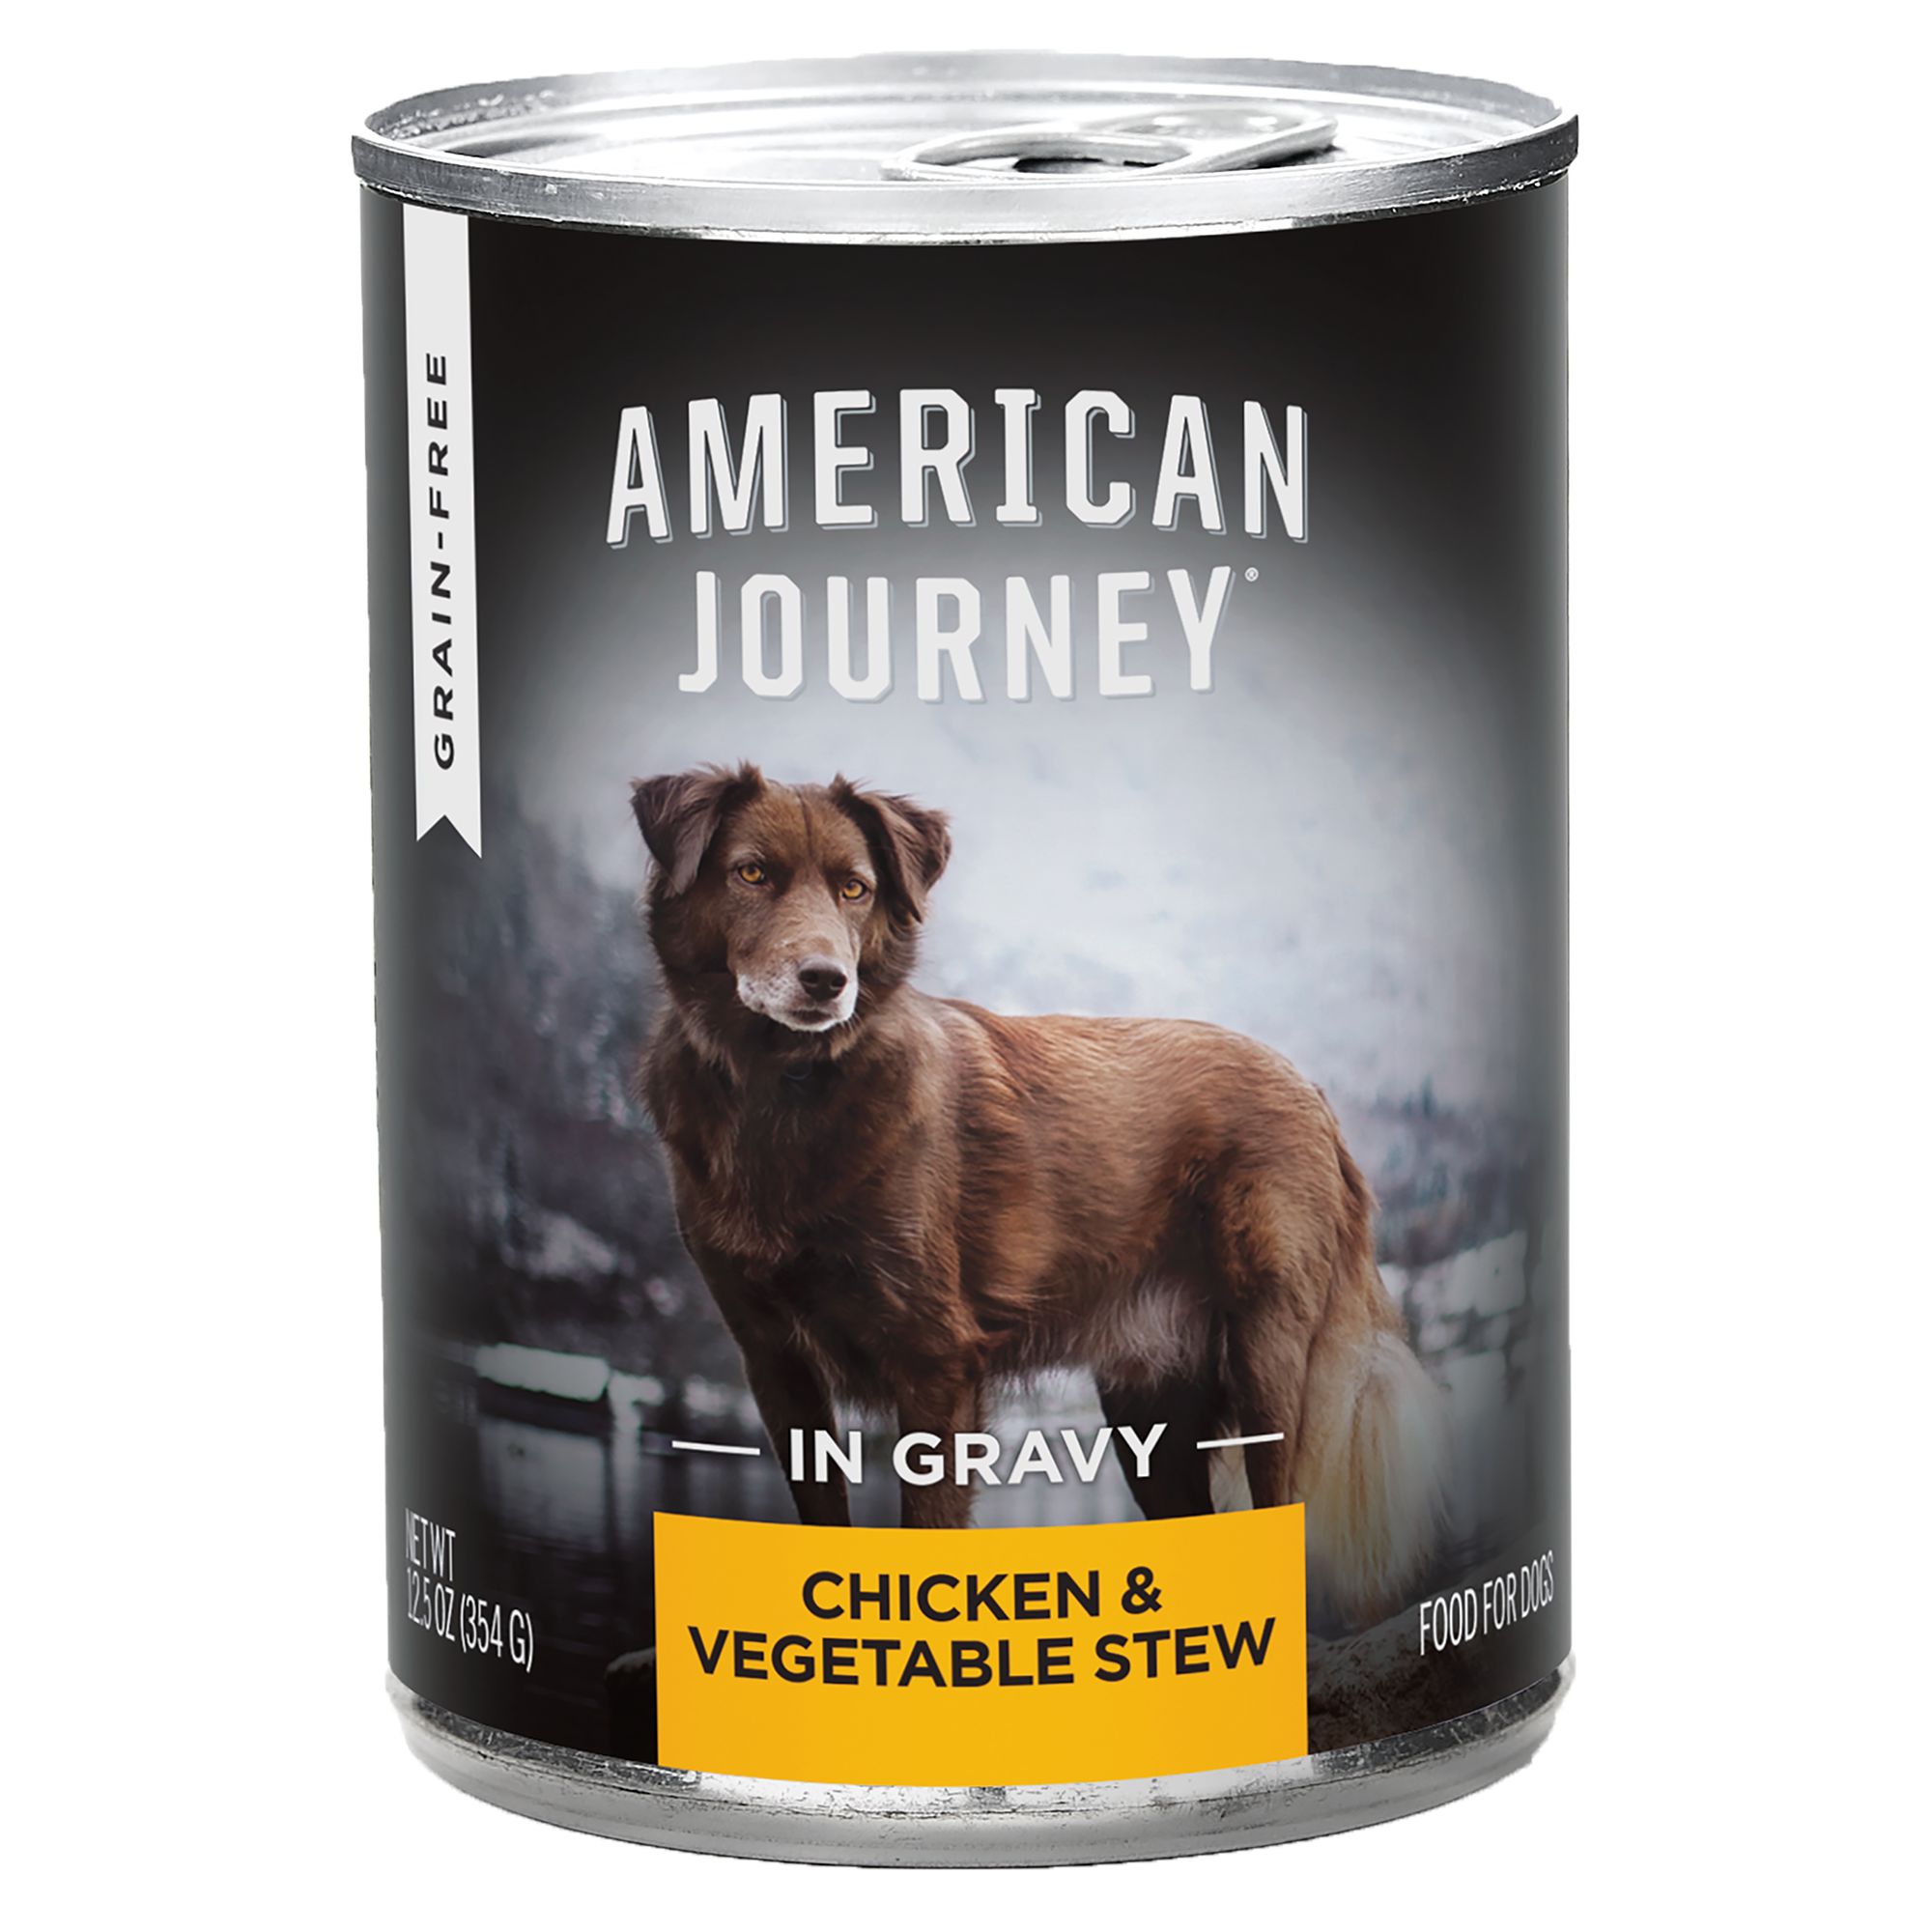 American Journey Dog Food | PetSmart